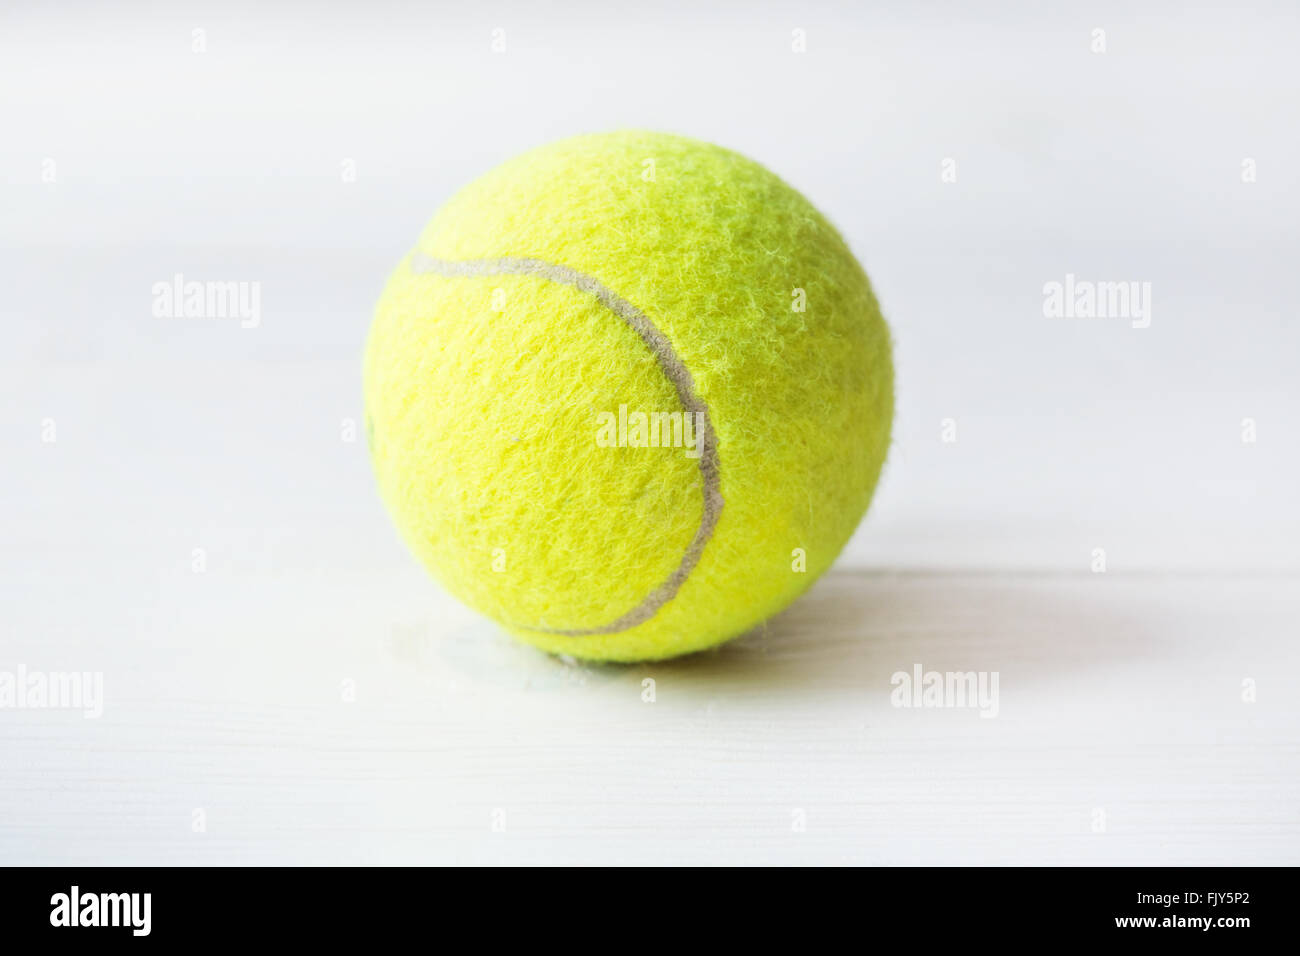 Tennis ball on a white background Stock Photo